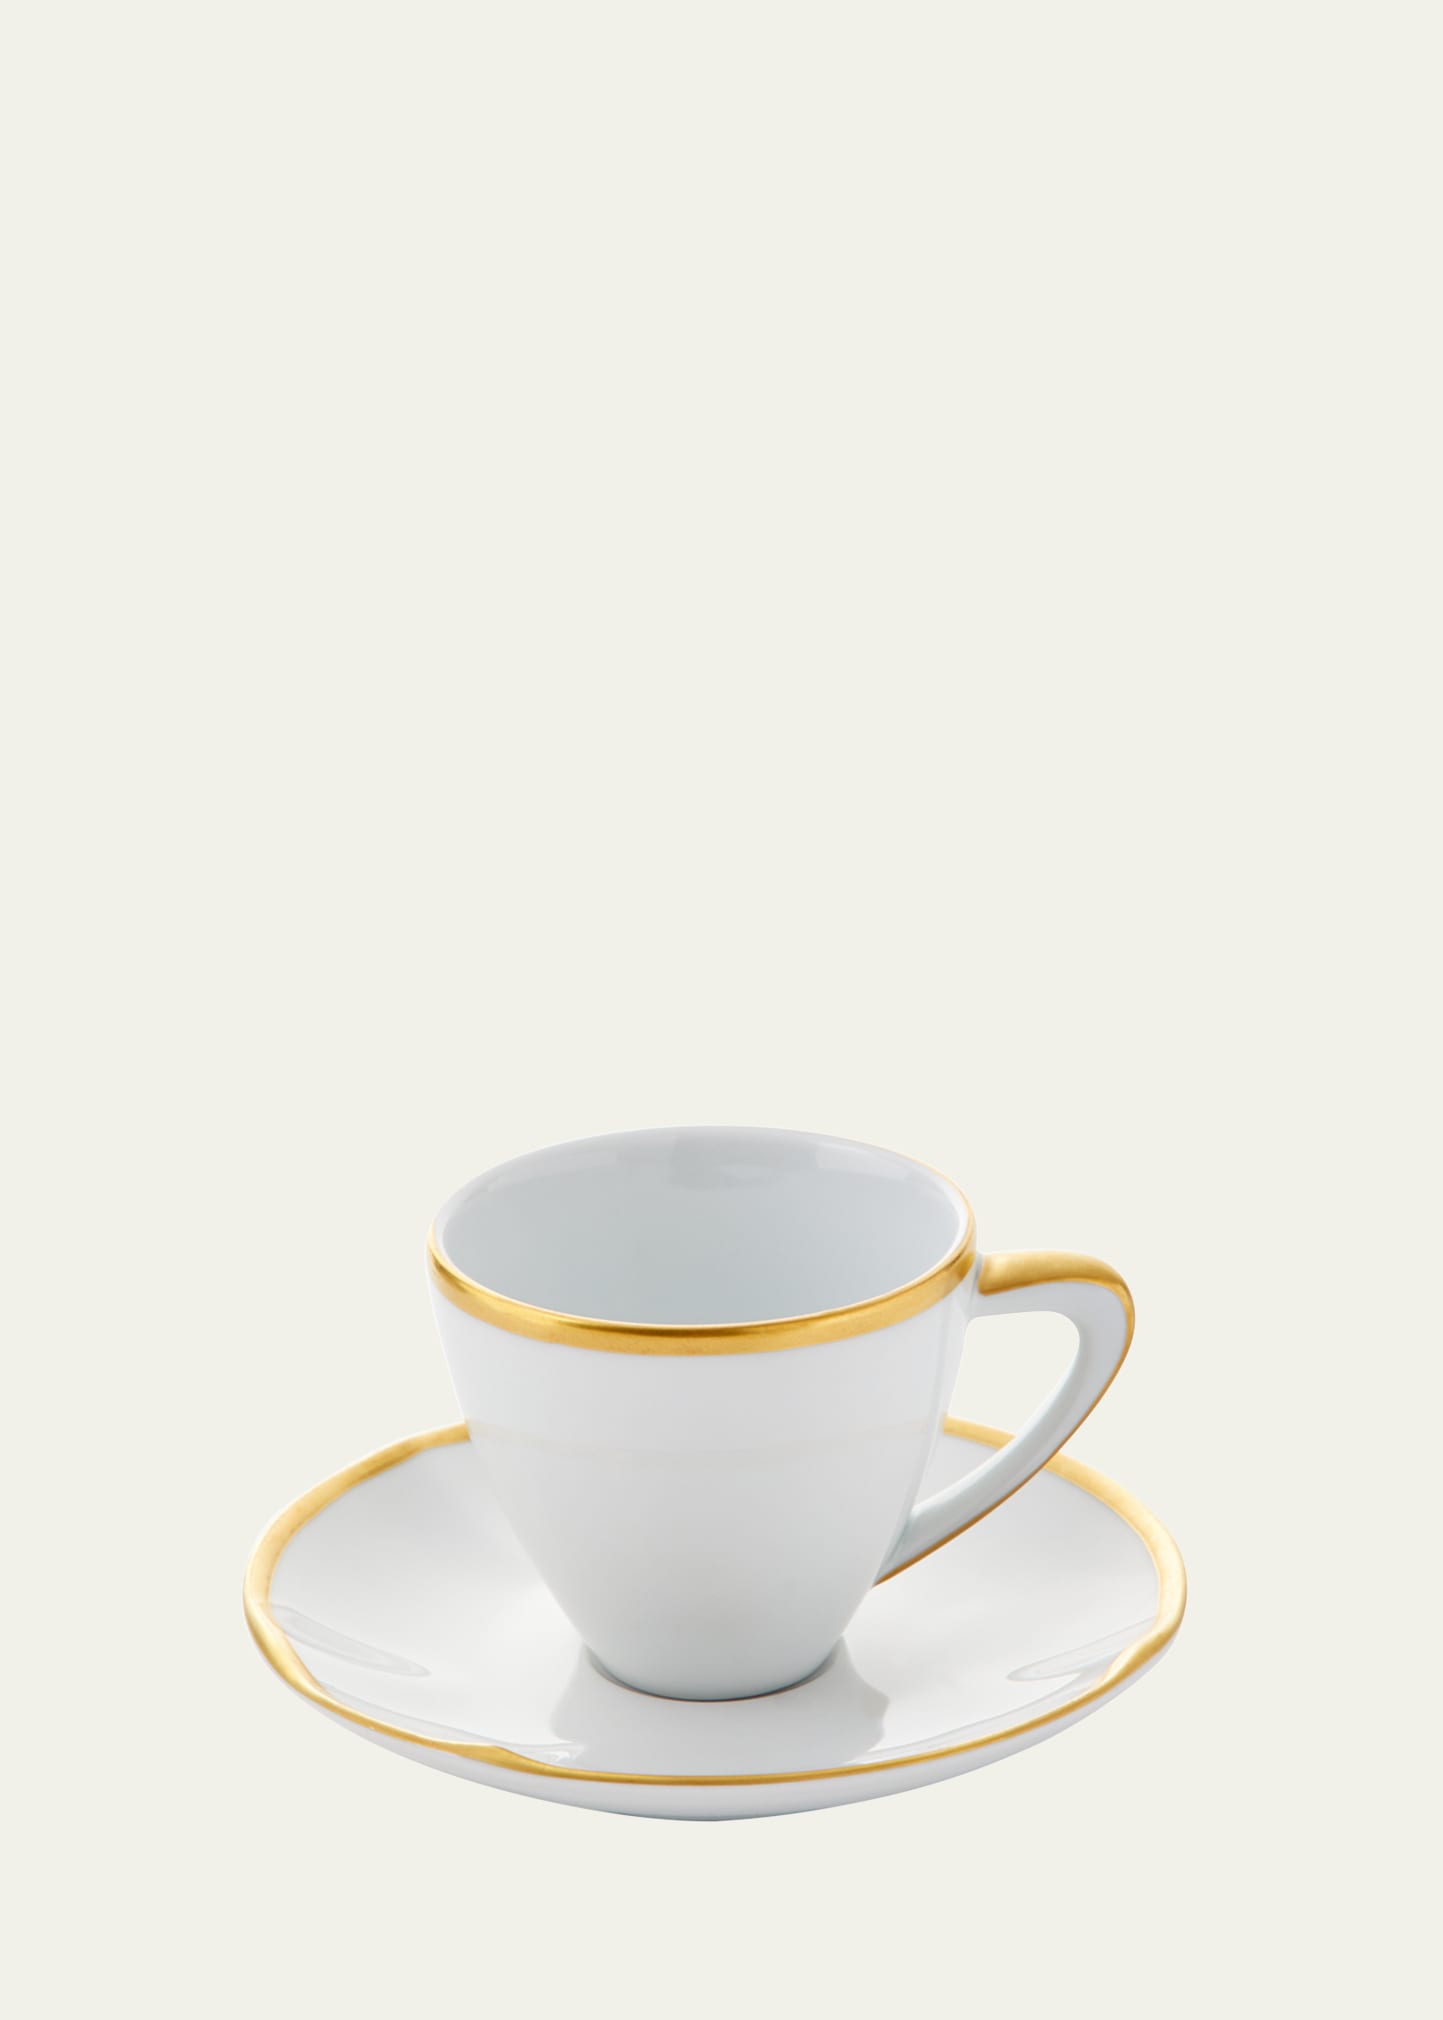 Simply Elegant Tea Cup & Saucer